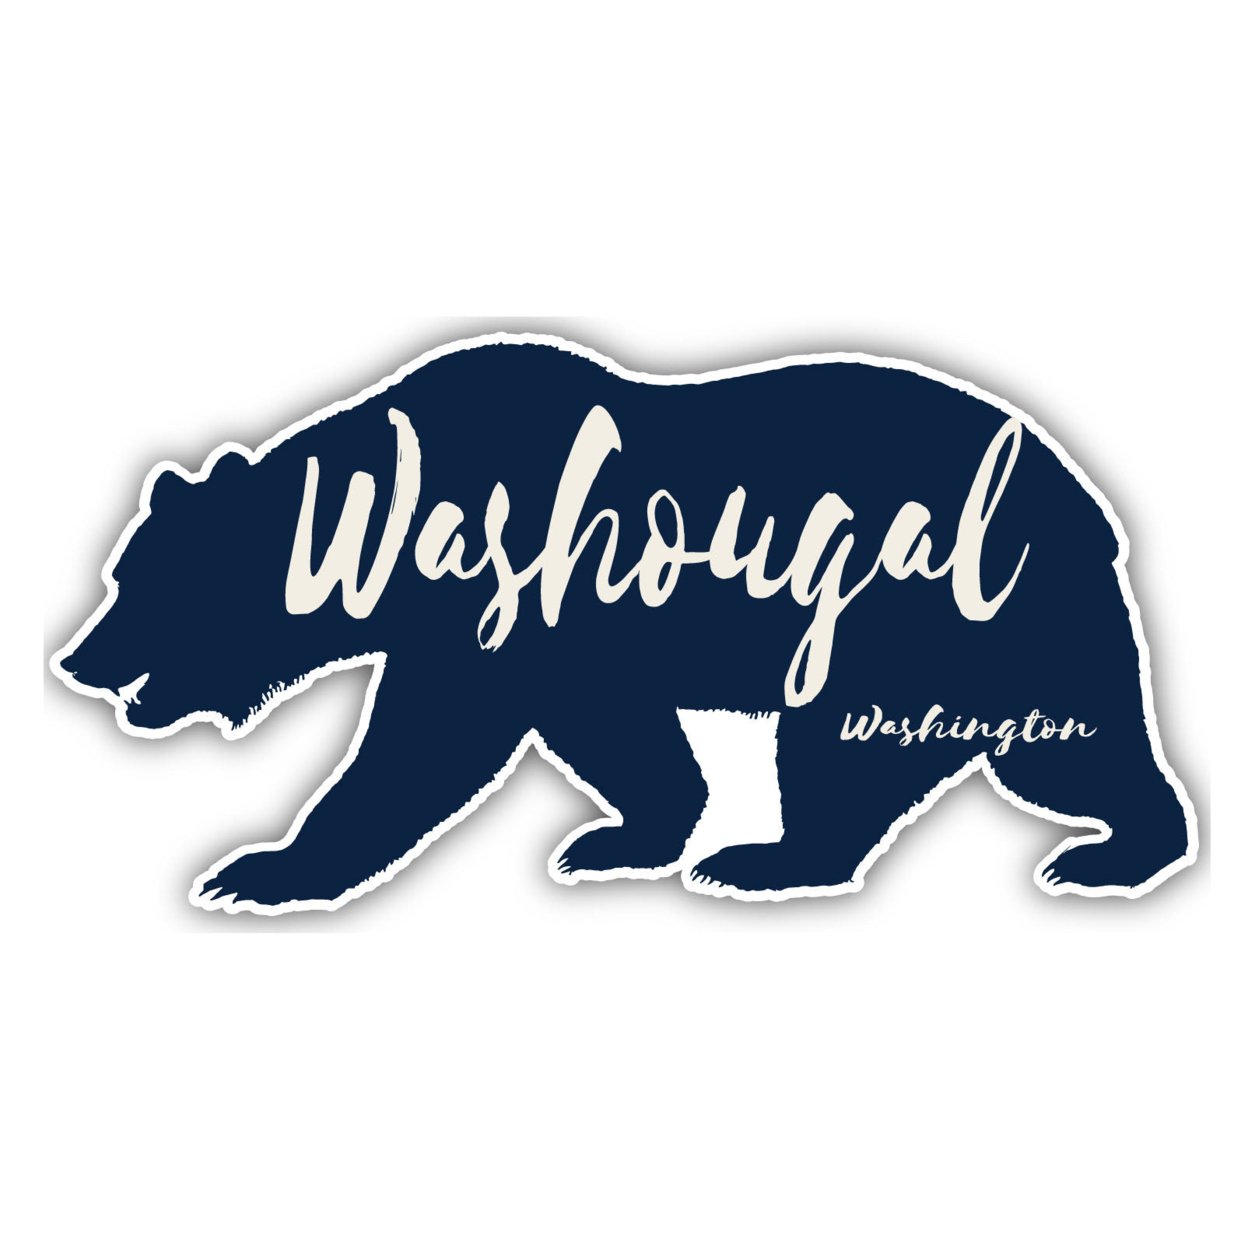 Washougal Washington Souvenir Decorative Stickers (Choose Theme And Size) - Single Unit, 4-Inch, Bear